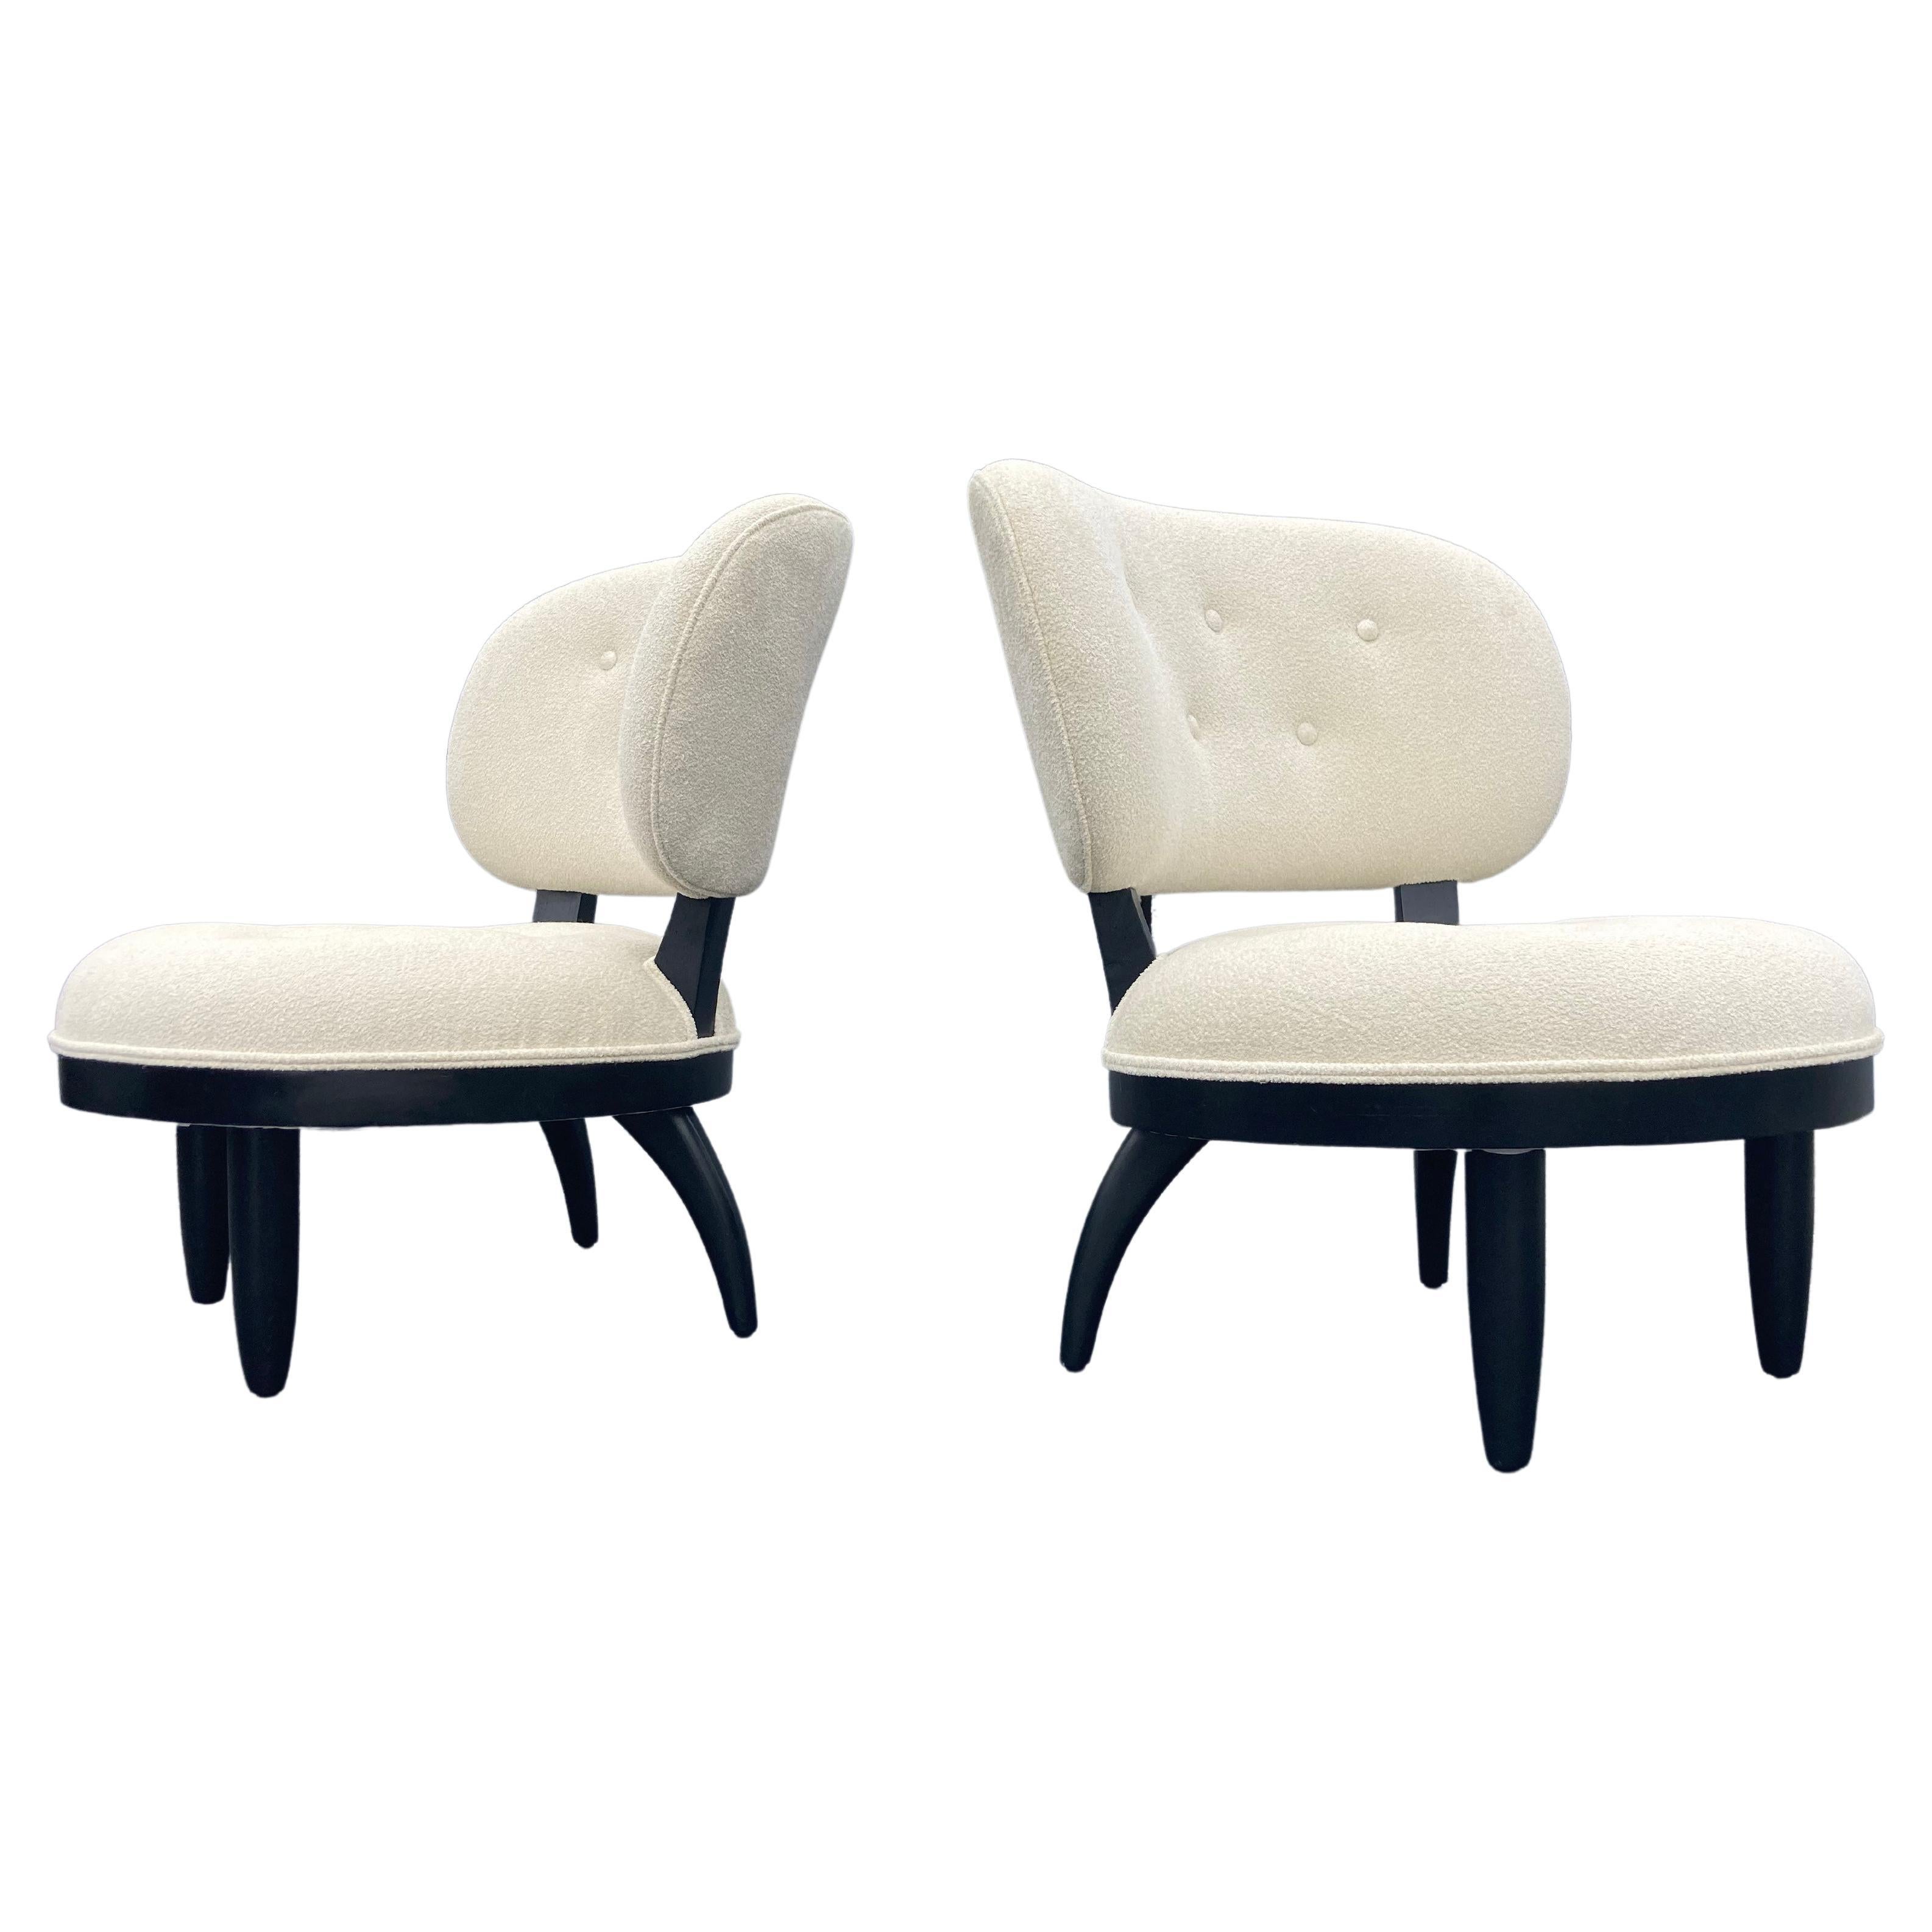 Original Mid Century Lounge Chairs, USA 1950s, Boucle Fabric